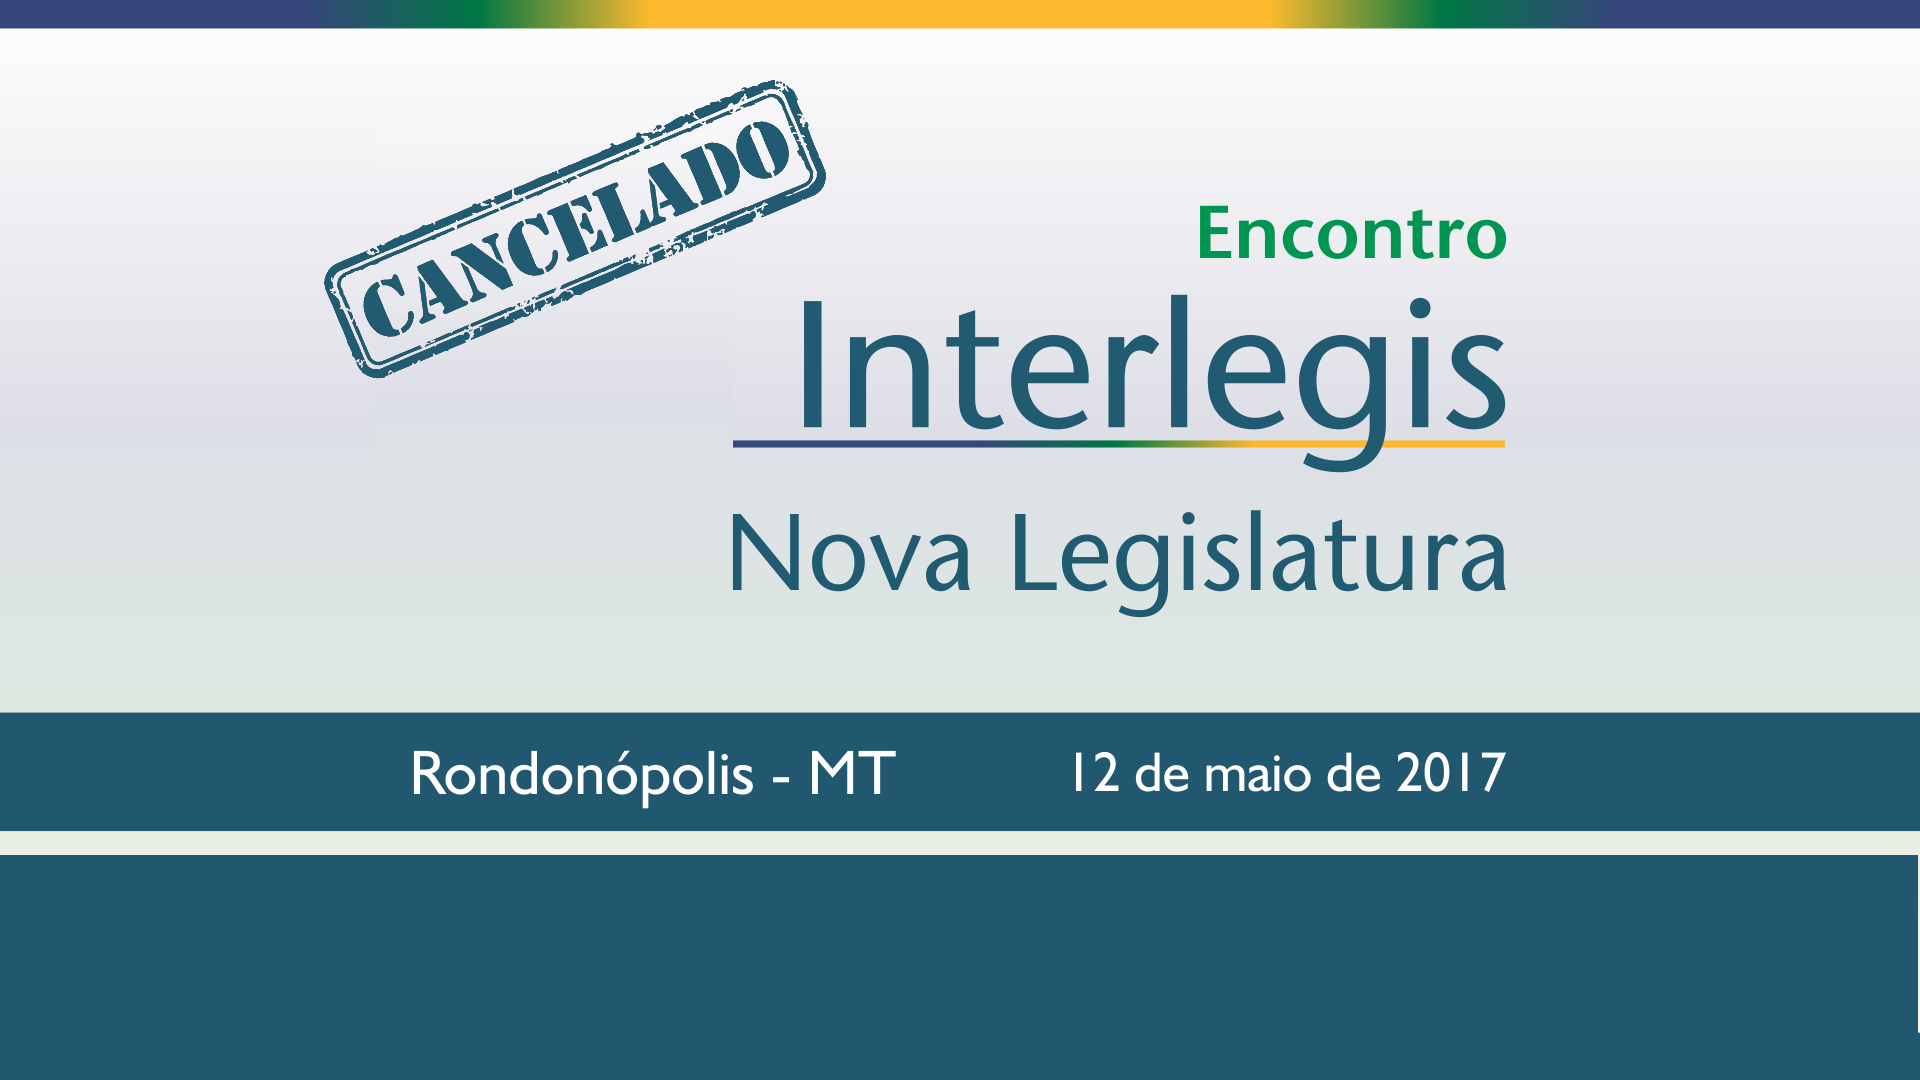 Cancelado Encontro Interlegis Nova Legislatura em Rondonópolis